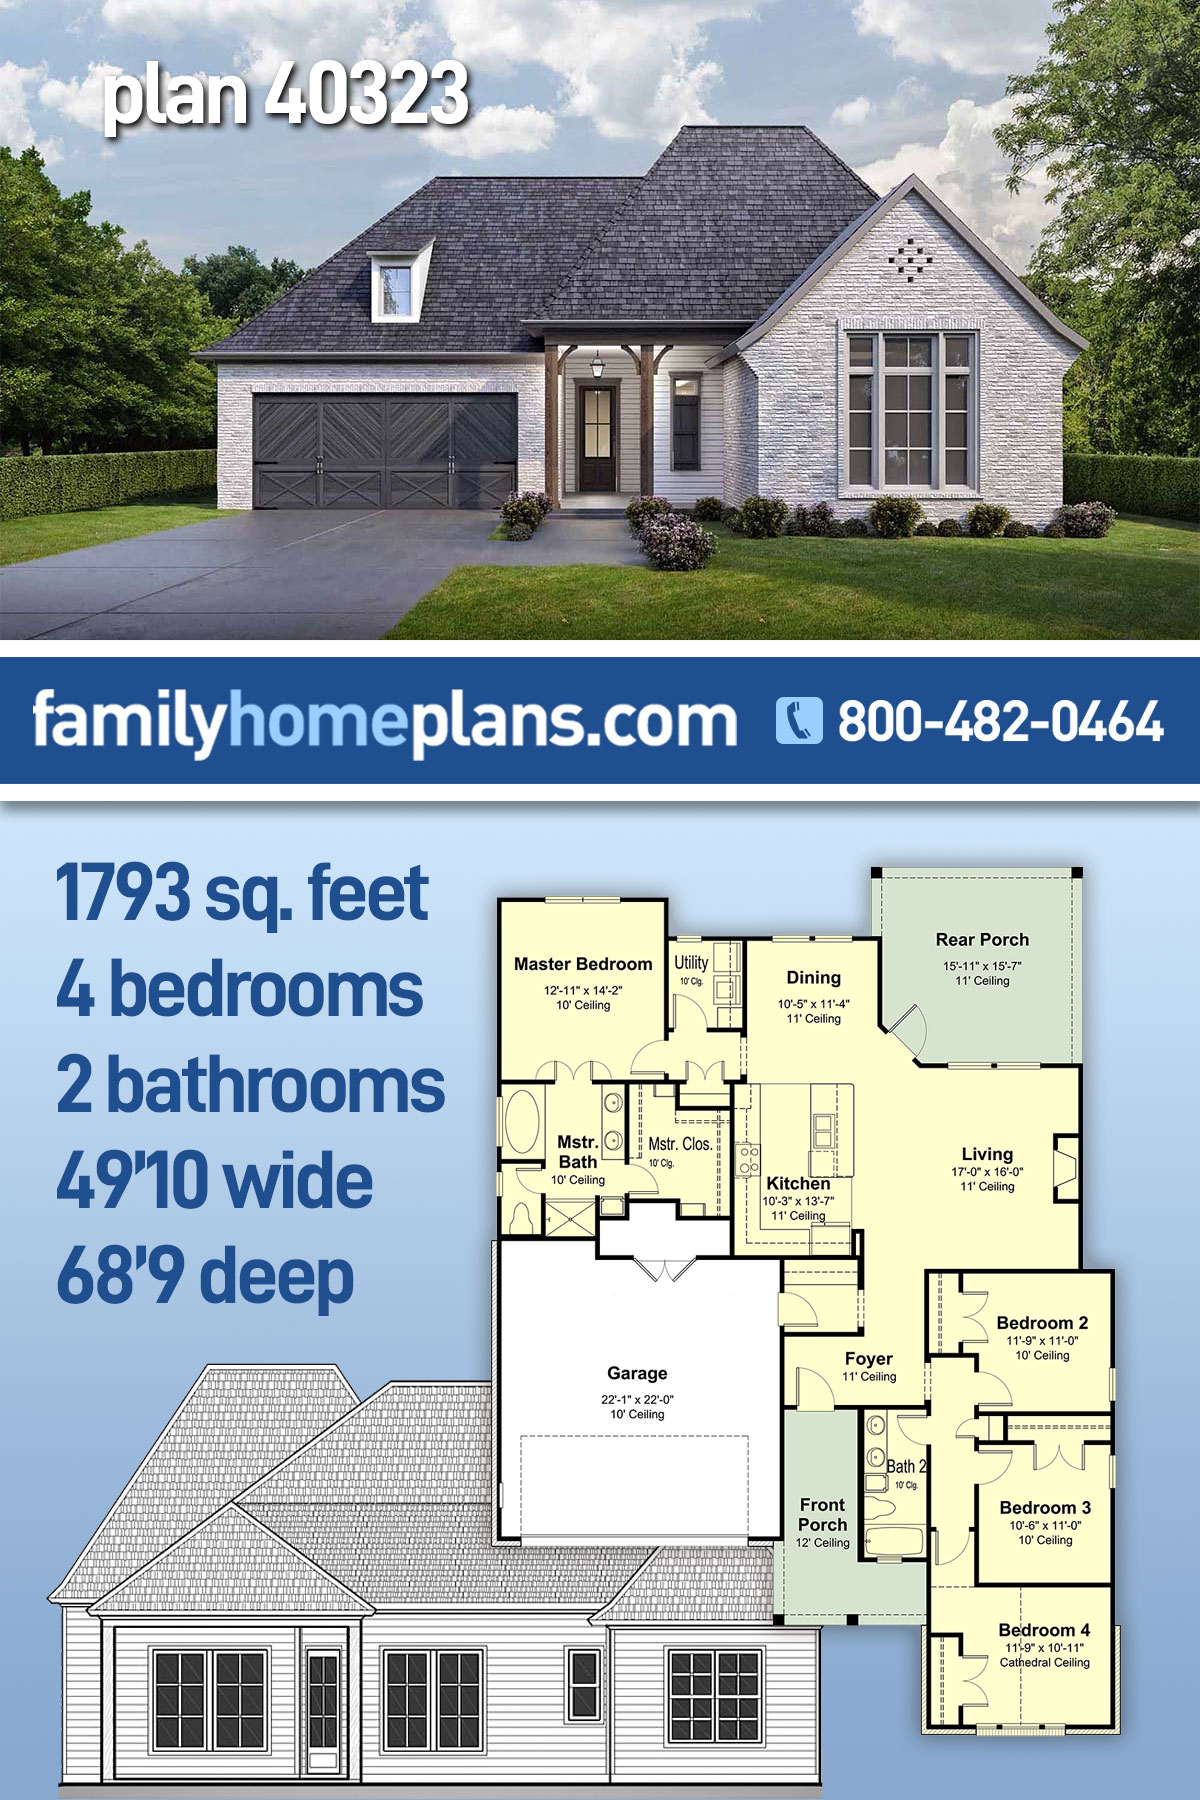 House Plan 40323